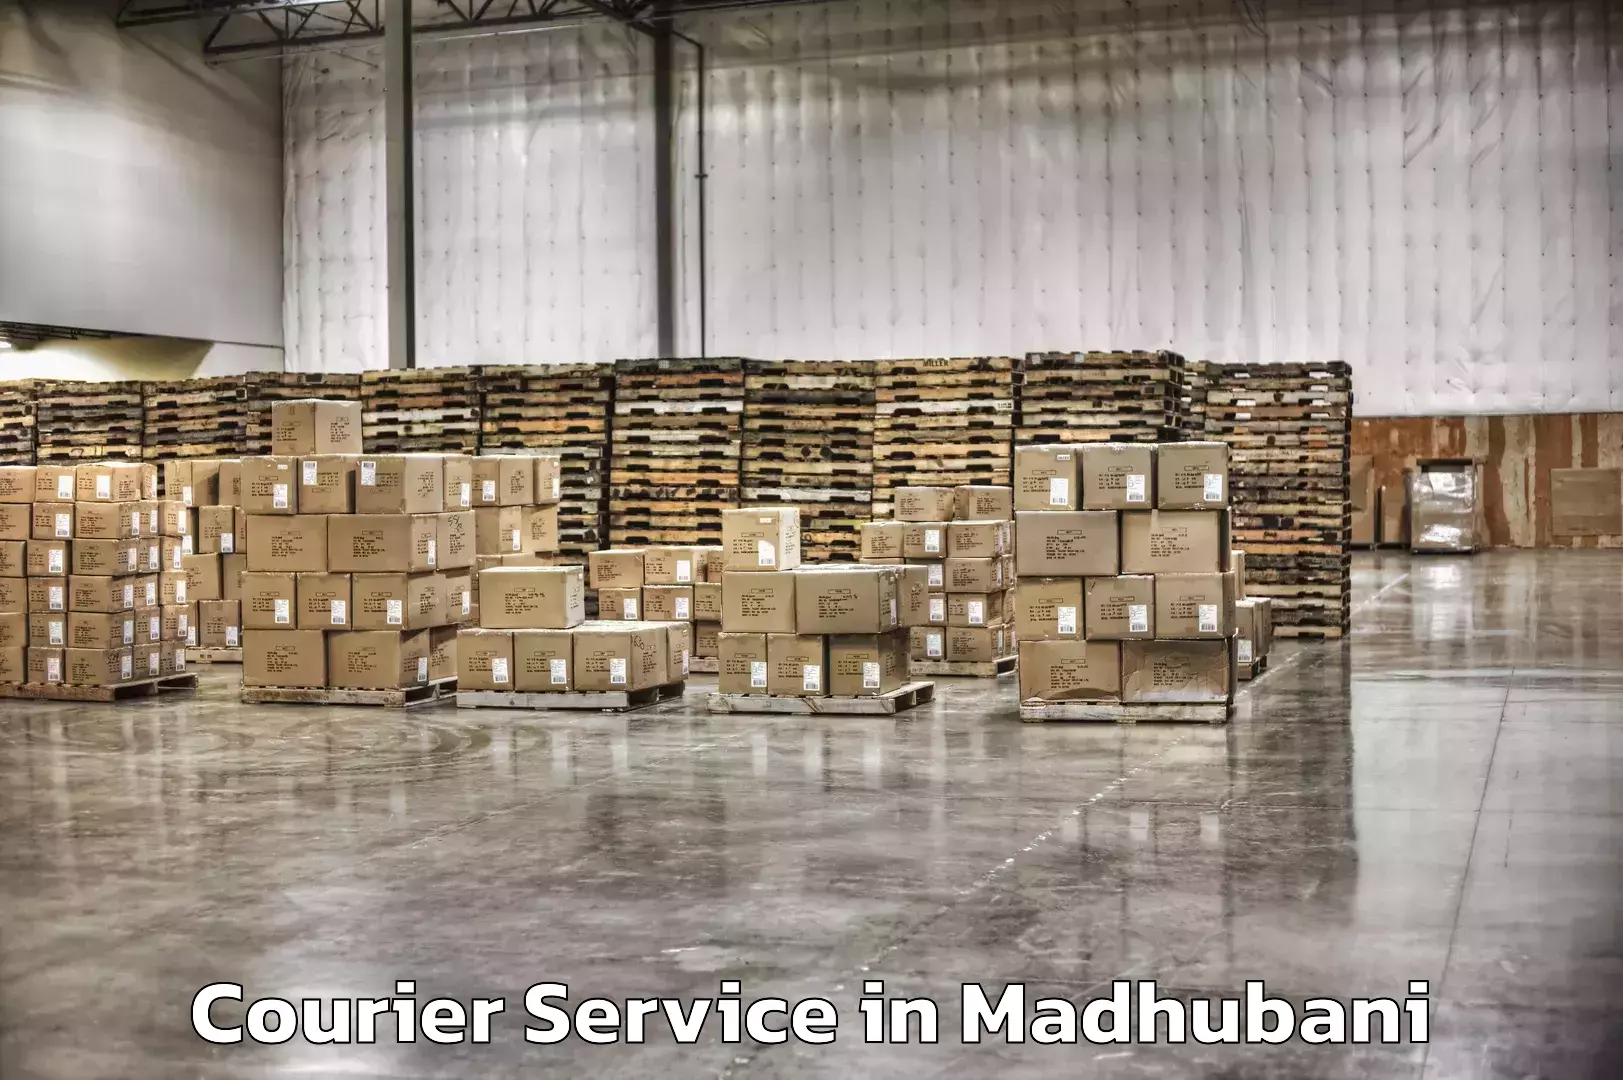 Innovative shipping solutions in Madhubani